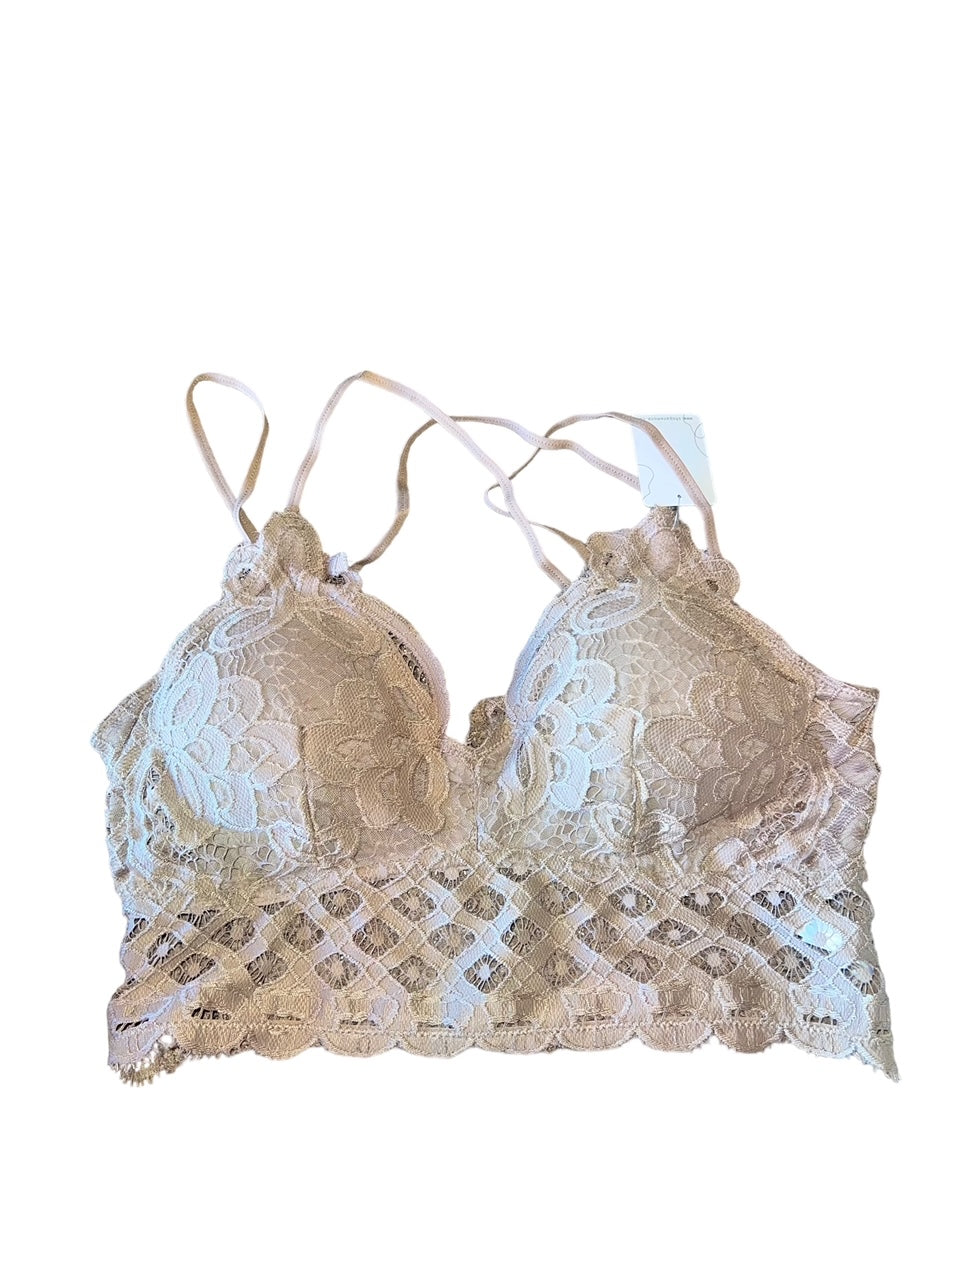 Undergarments | Bralette Crochet Lace